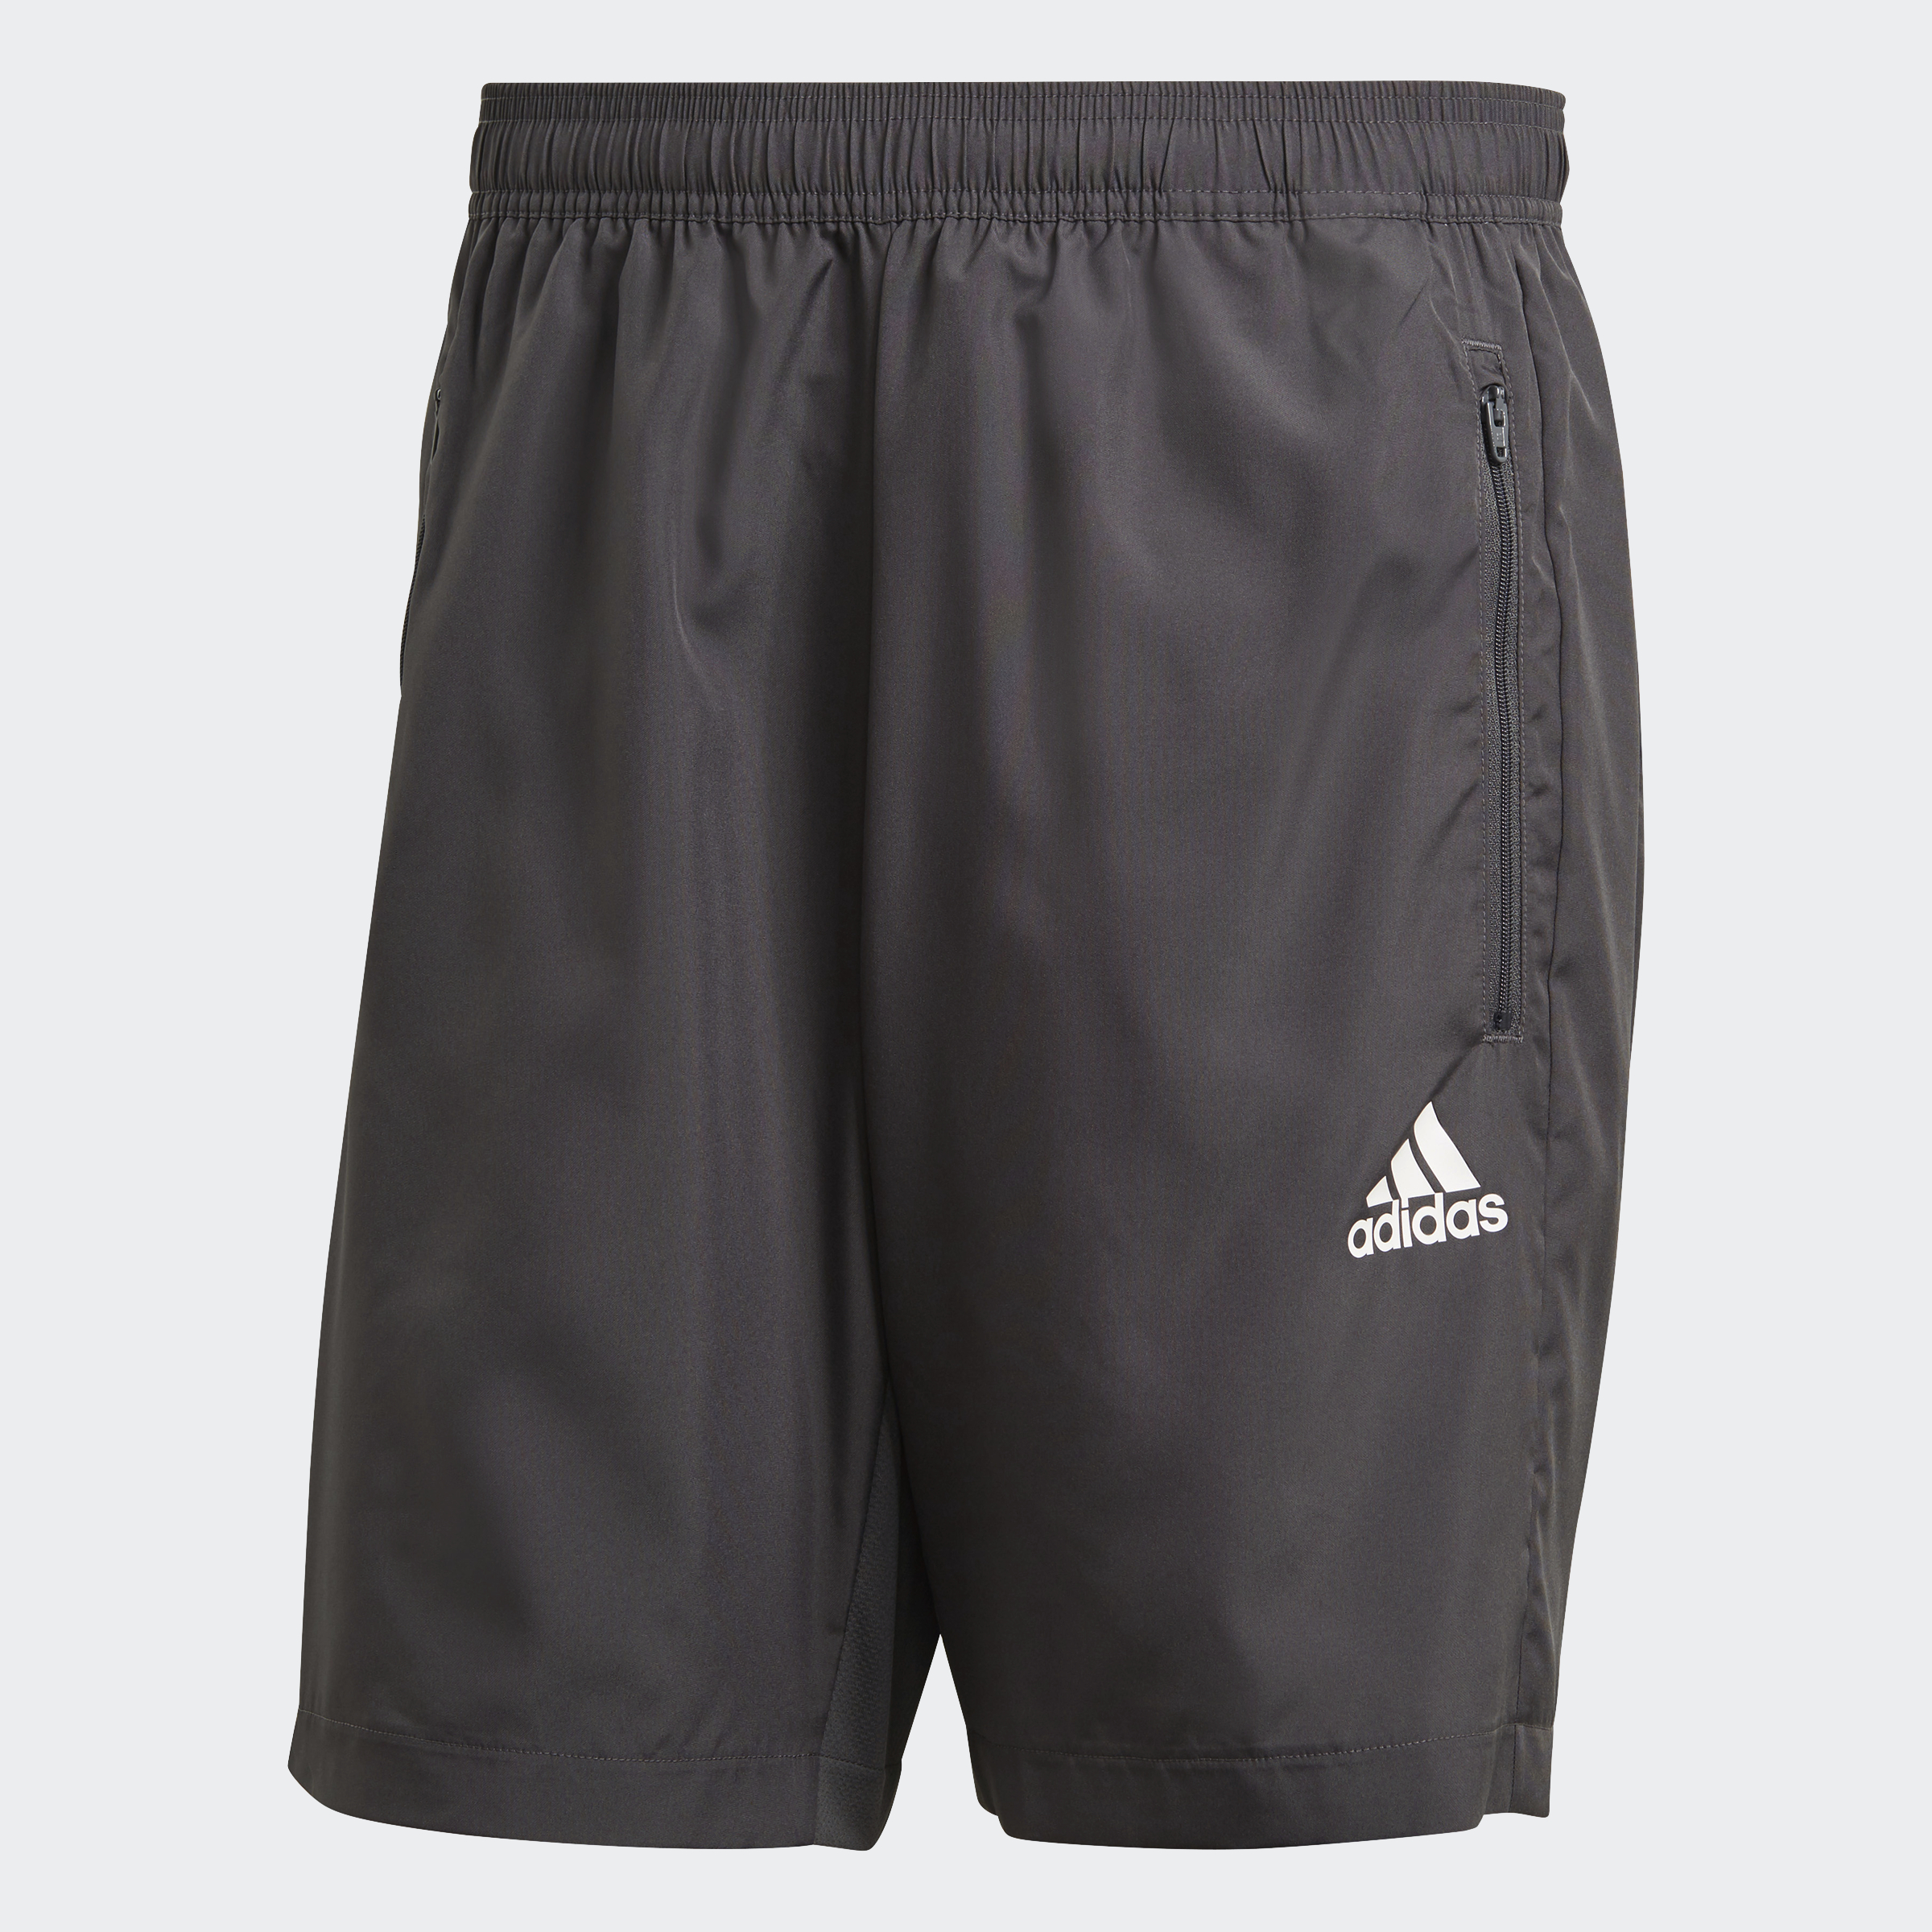 stel je voor President lawaai adidas AEROREADY Designed 2 Move Men's Woven Sport Shorts - Gray, Size: L  (GT8165) for sale online | eBay